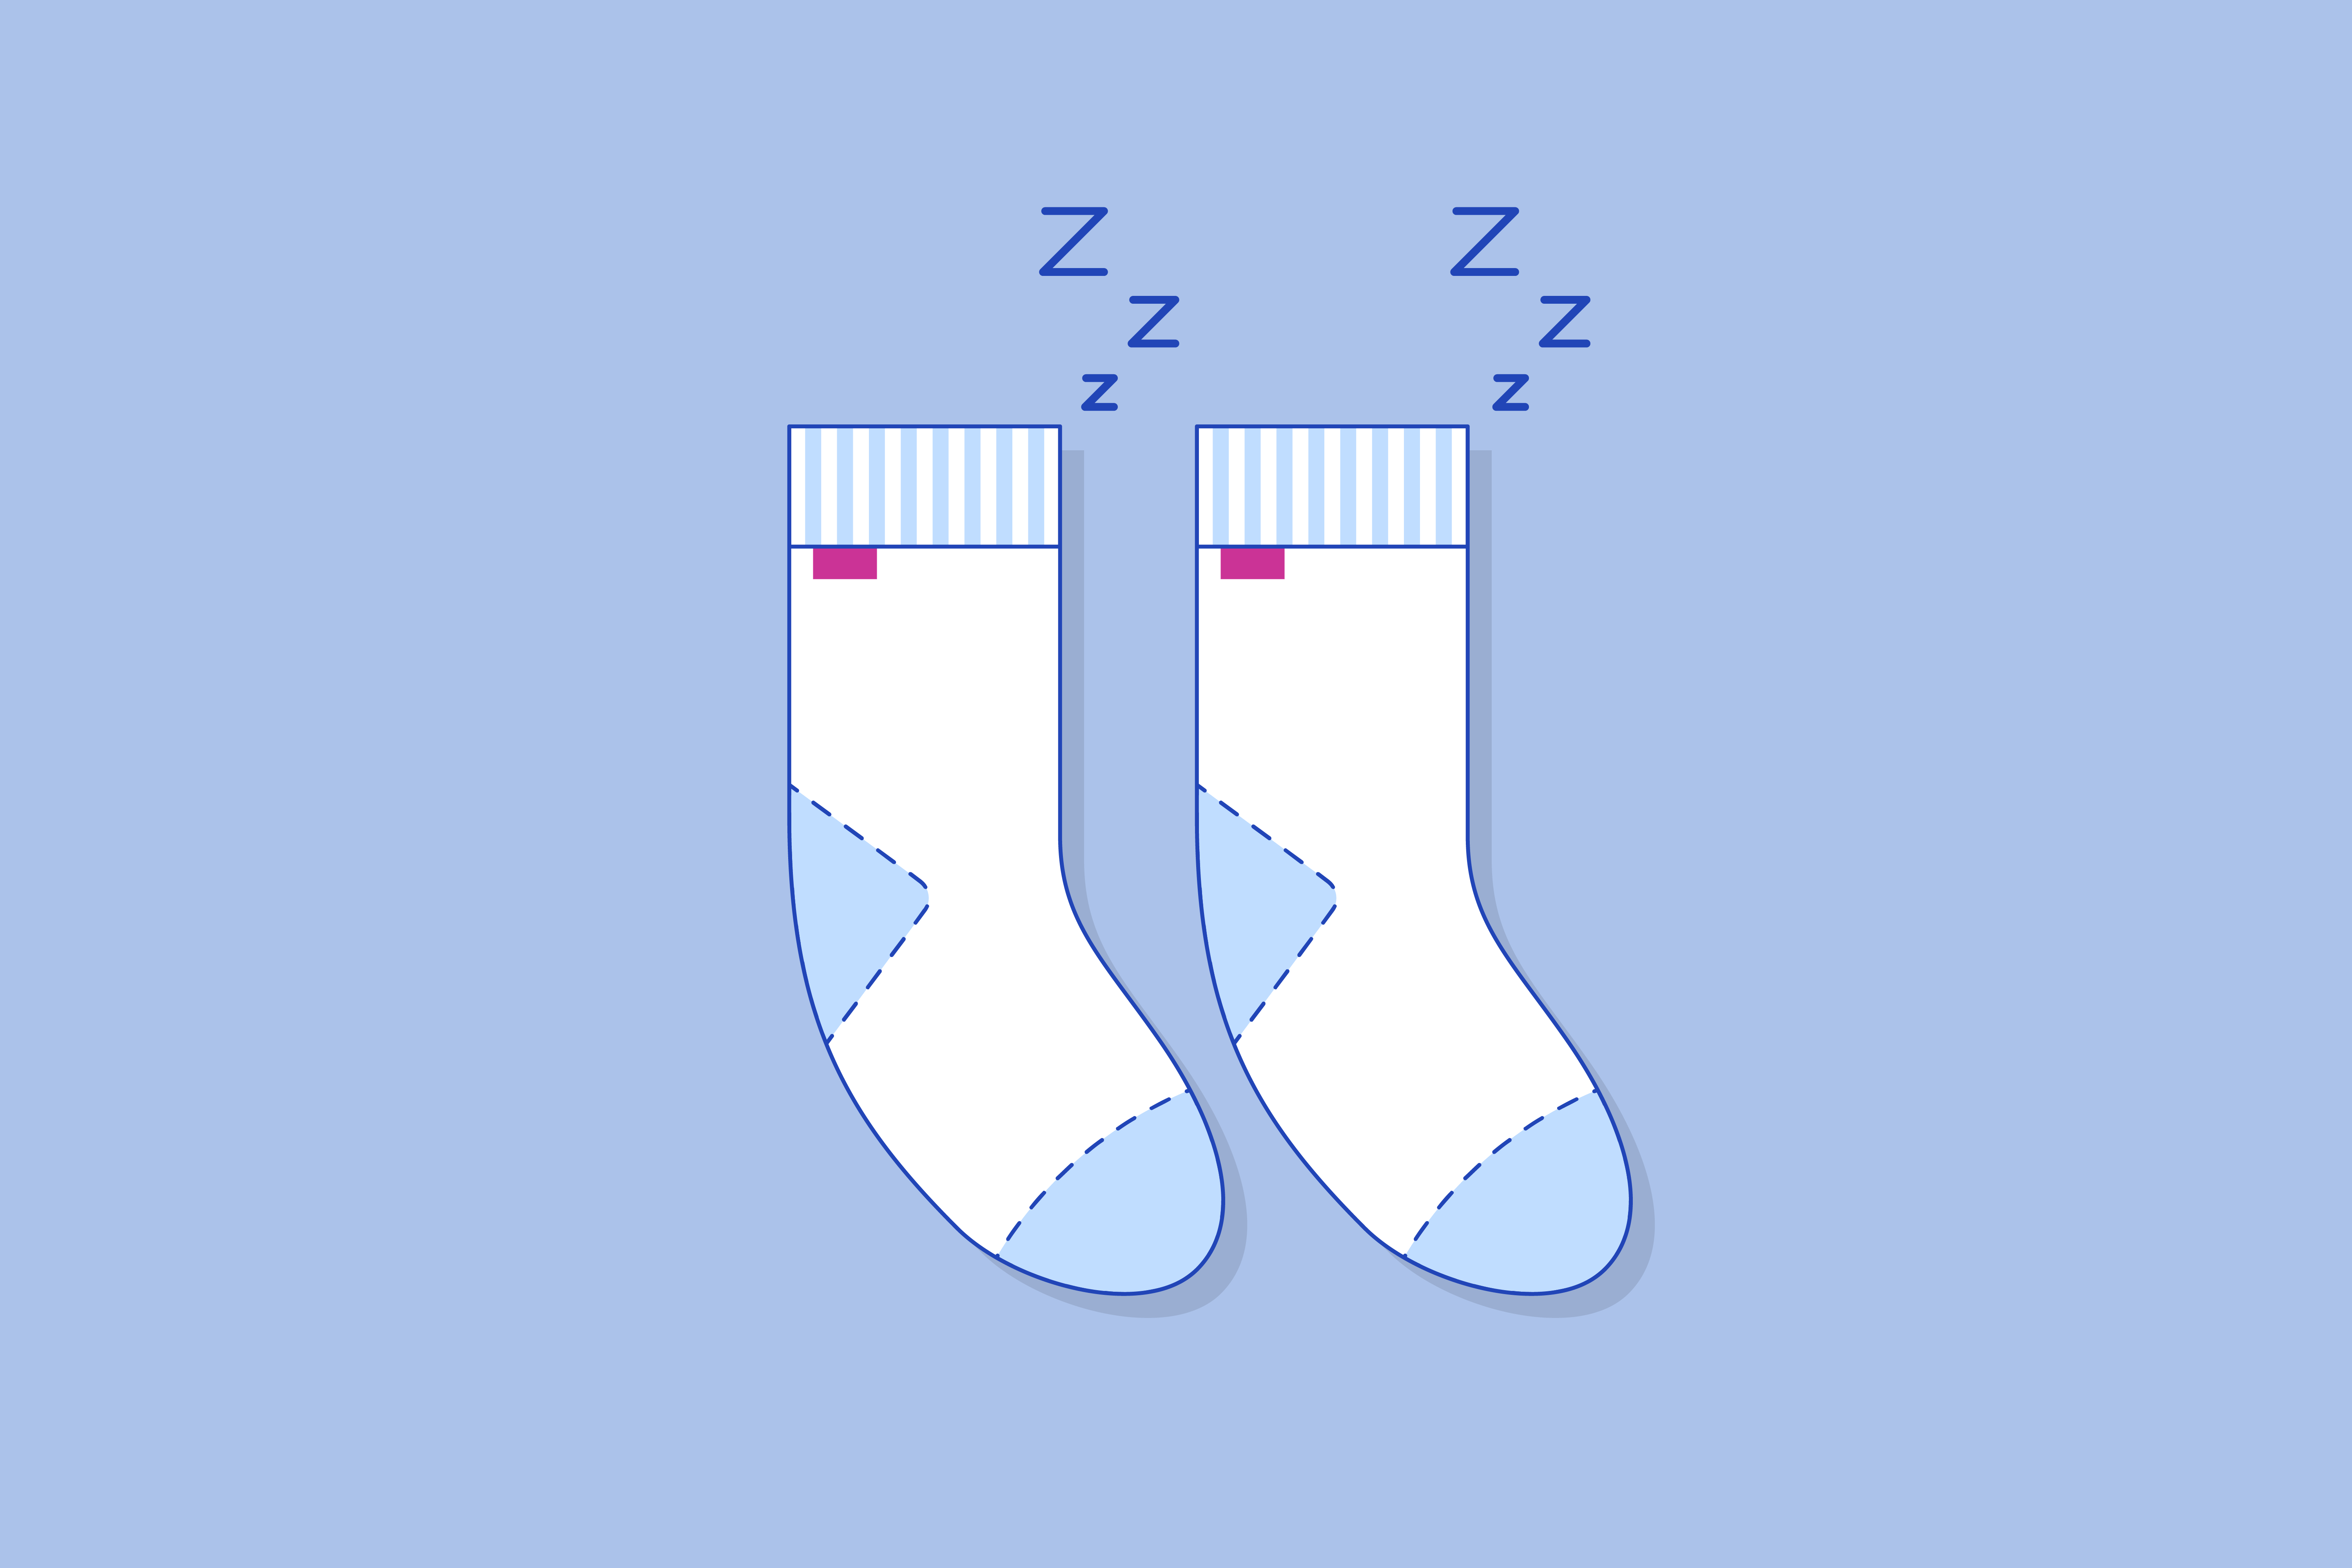 Sleeping With Socks On: Can It Help You Sleep?